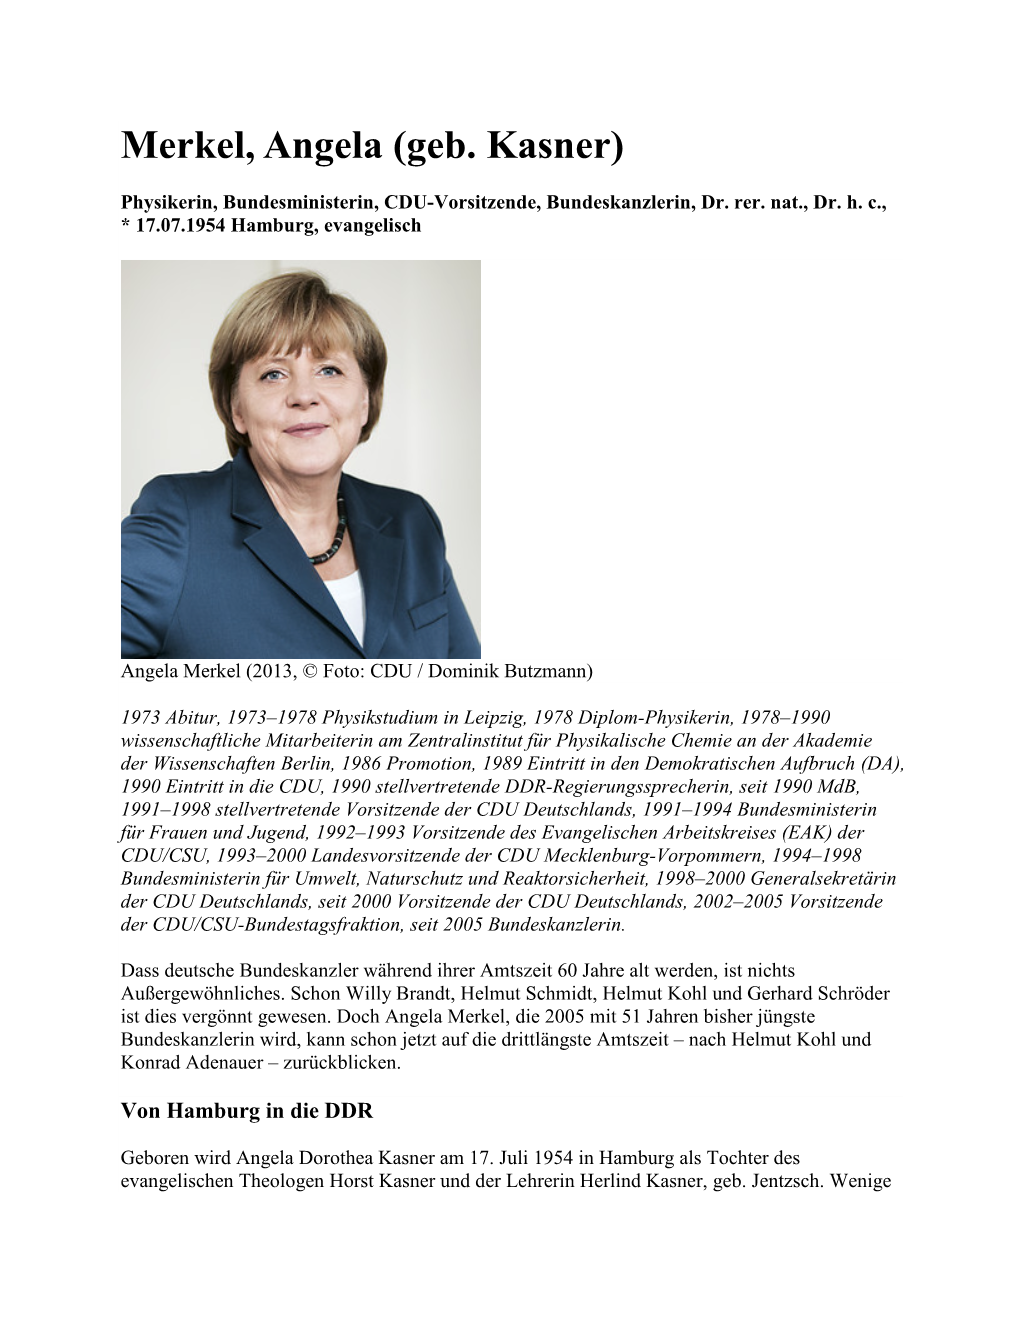 Merkel, Angela (Geb